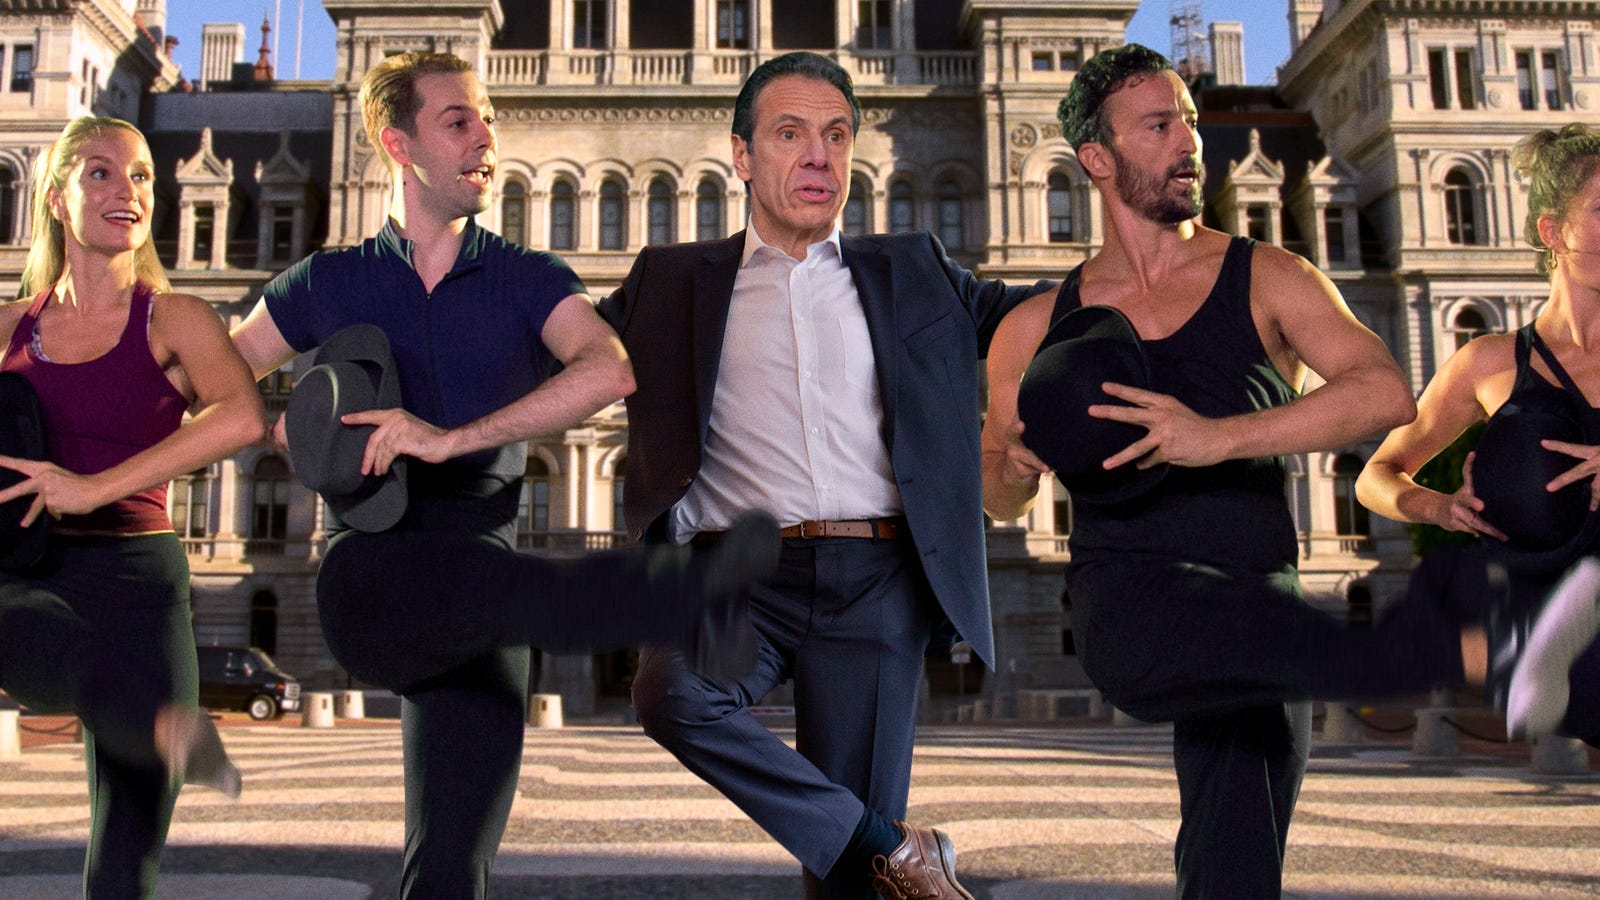 Governor Cuomo in dance line